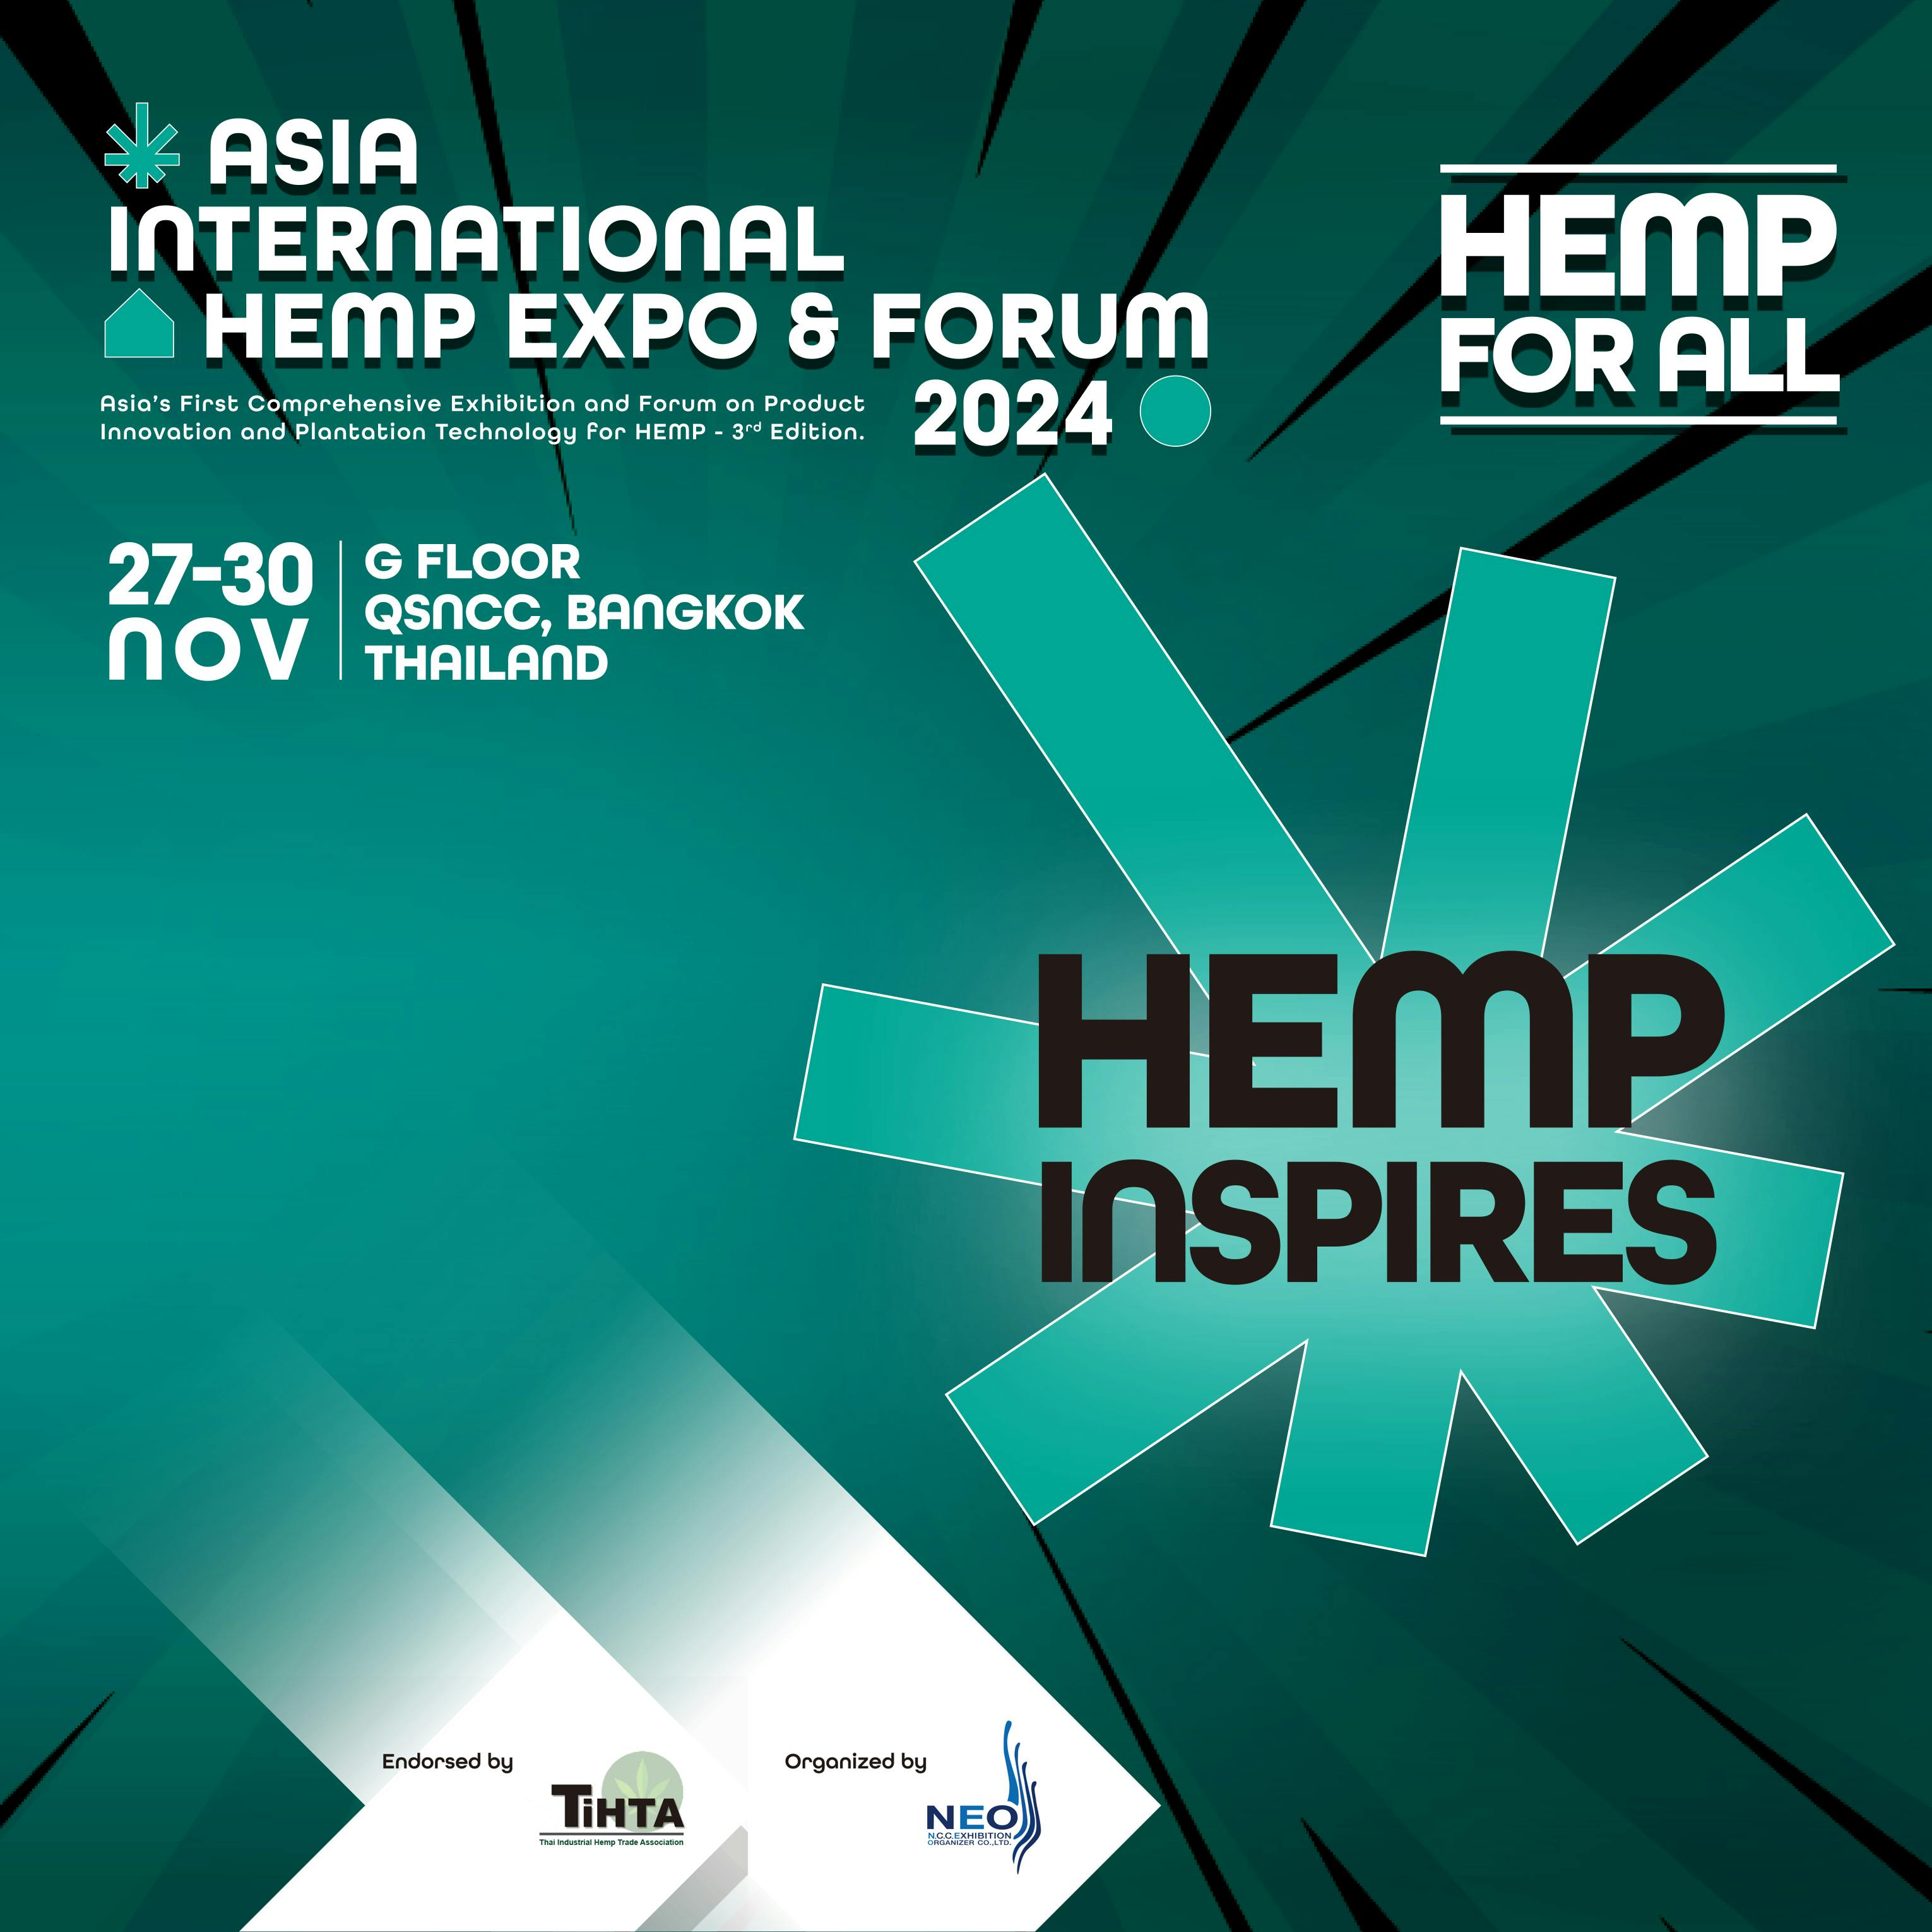 Asia International HEMP Expo & Forum 2024